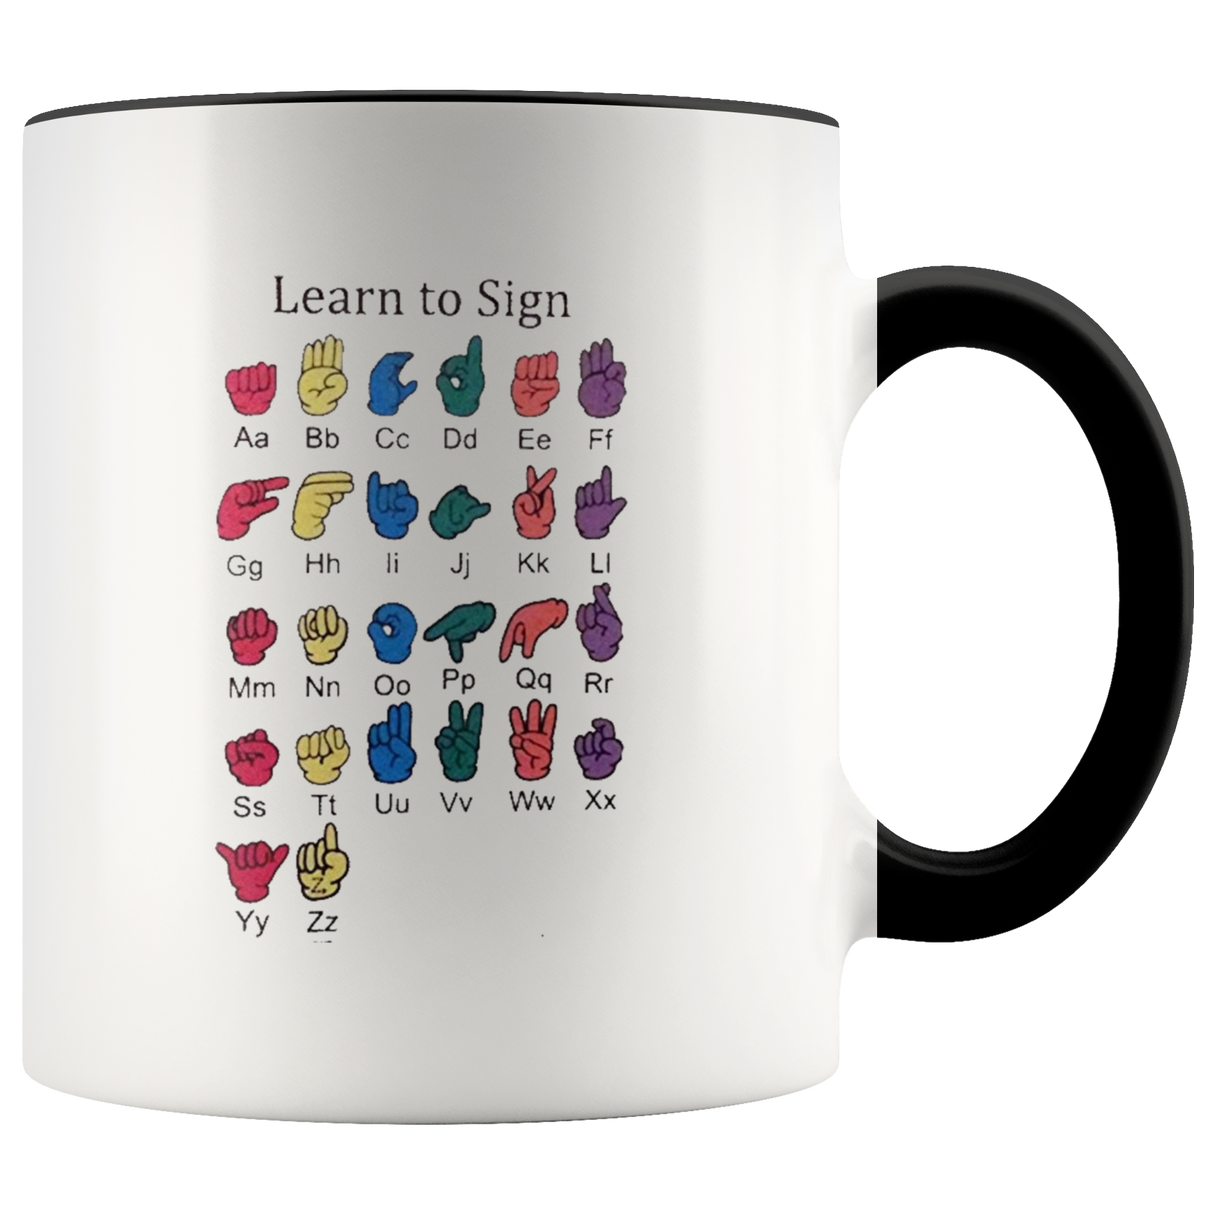 Learn ASL Ceramic Accent Mug - Black | Shop Sassy Chick